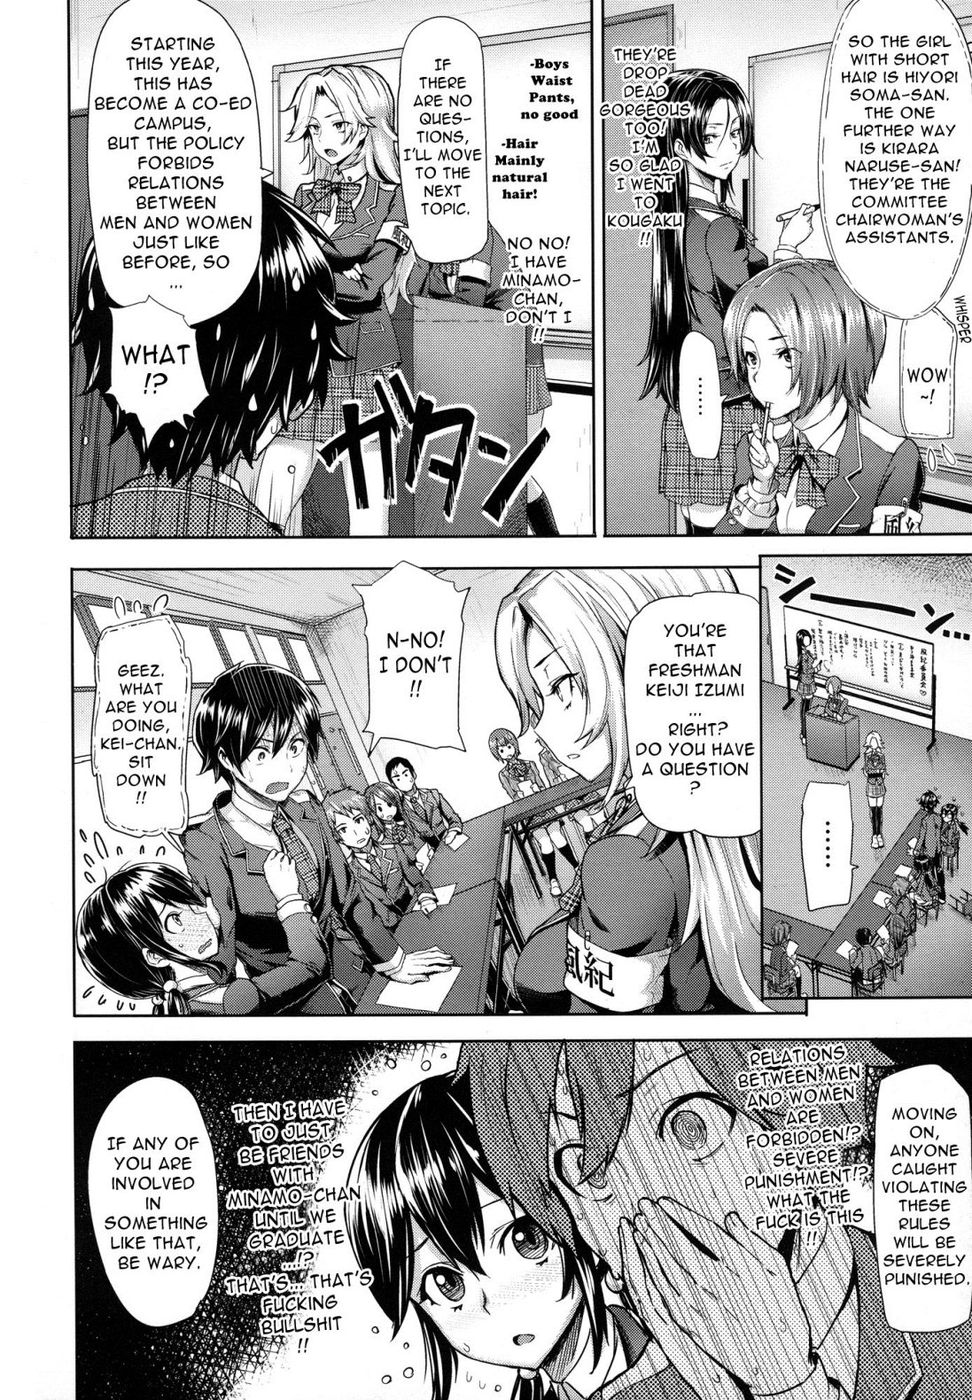 Hentai Manga Comic-Limit Break 3-Chapter 2-Corruption Of Morals Vol1-4